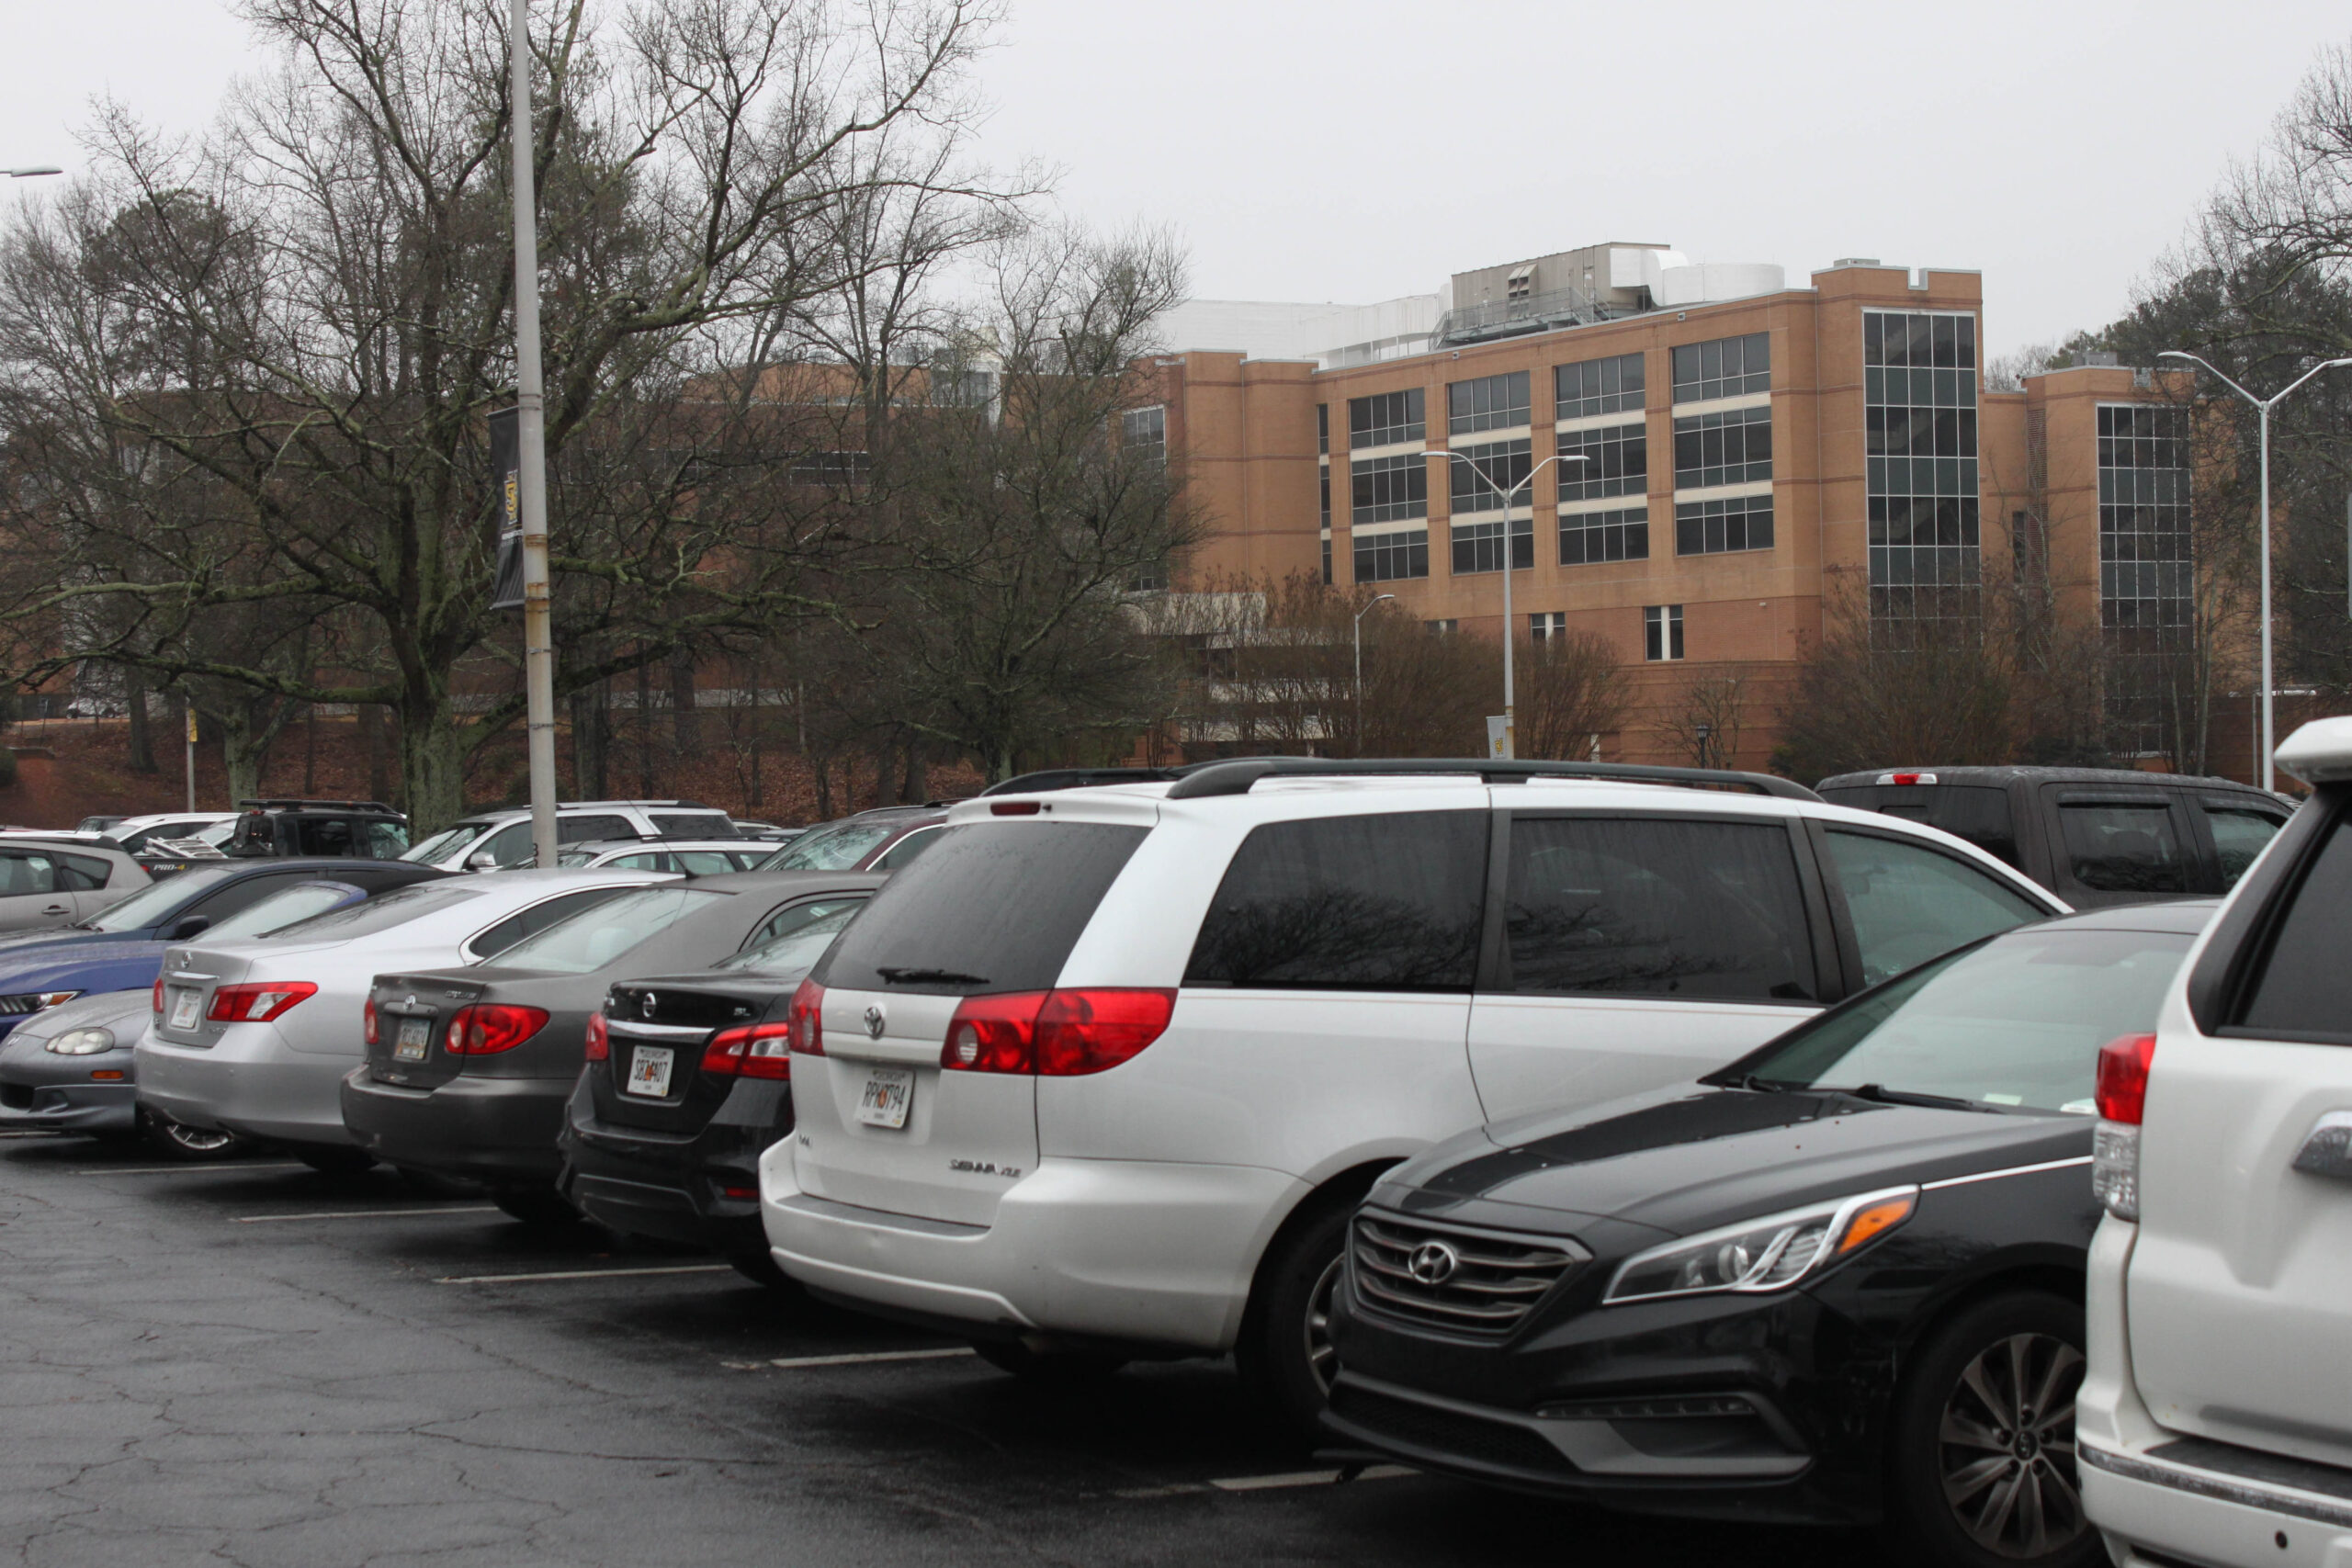 OPINION: KSU should ban freshmen from parking on campus